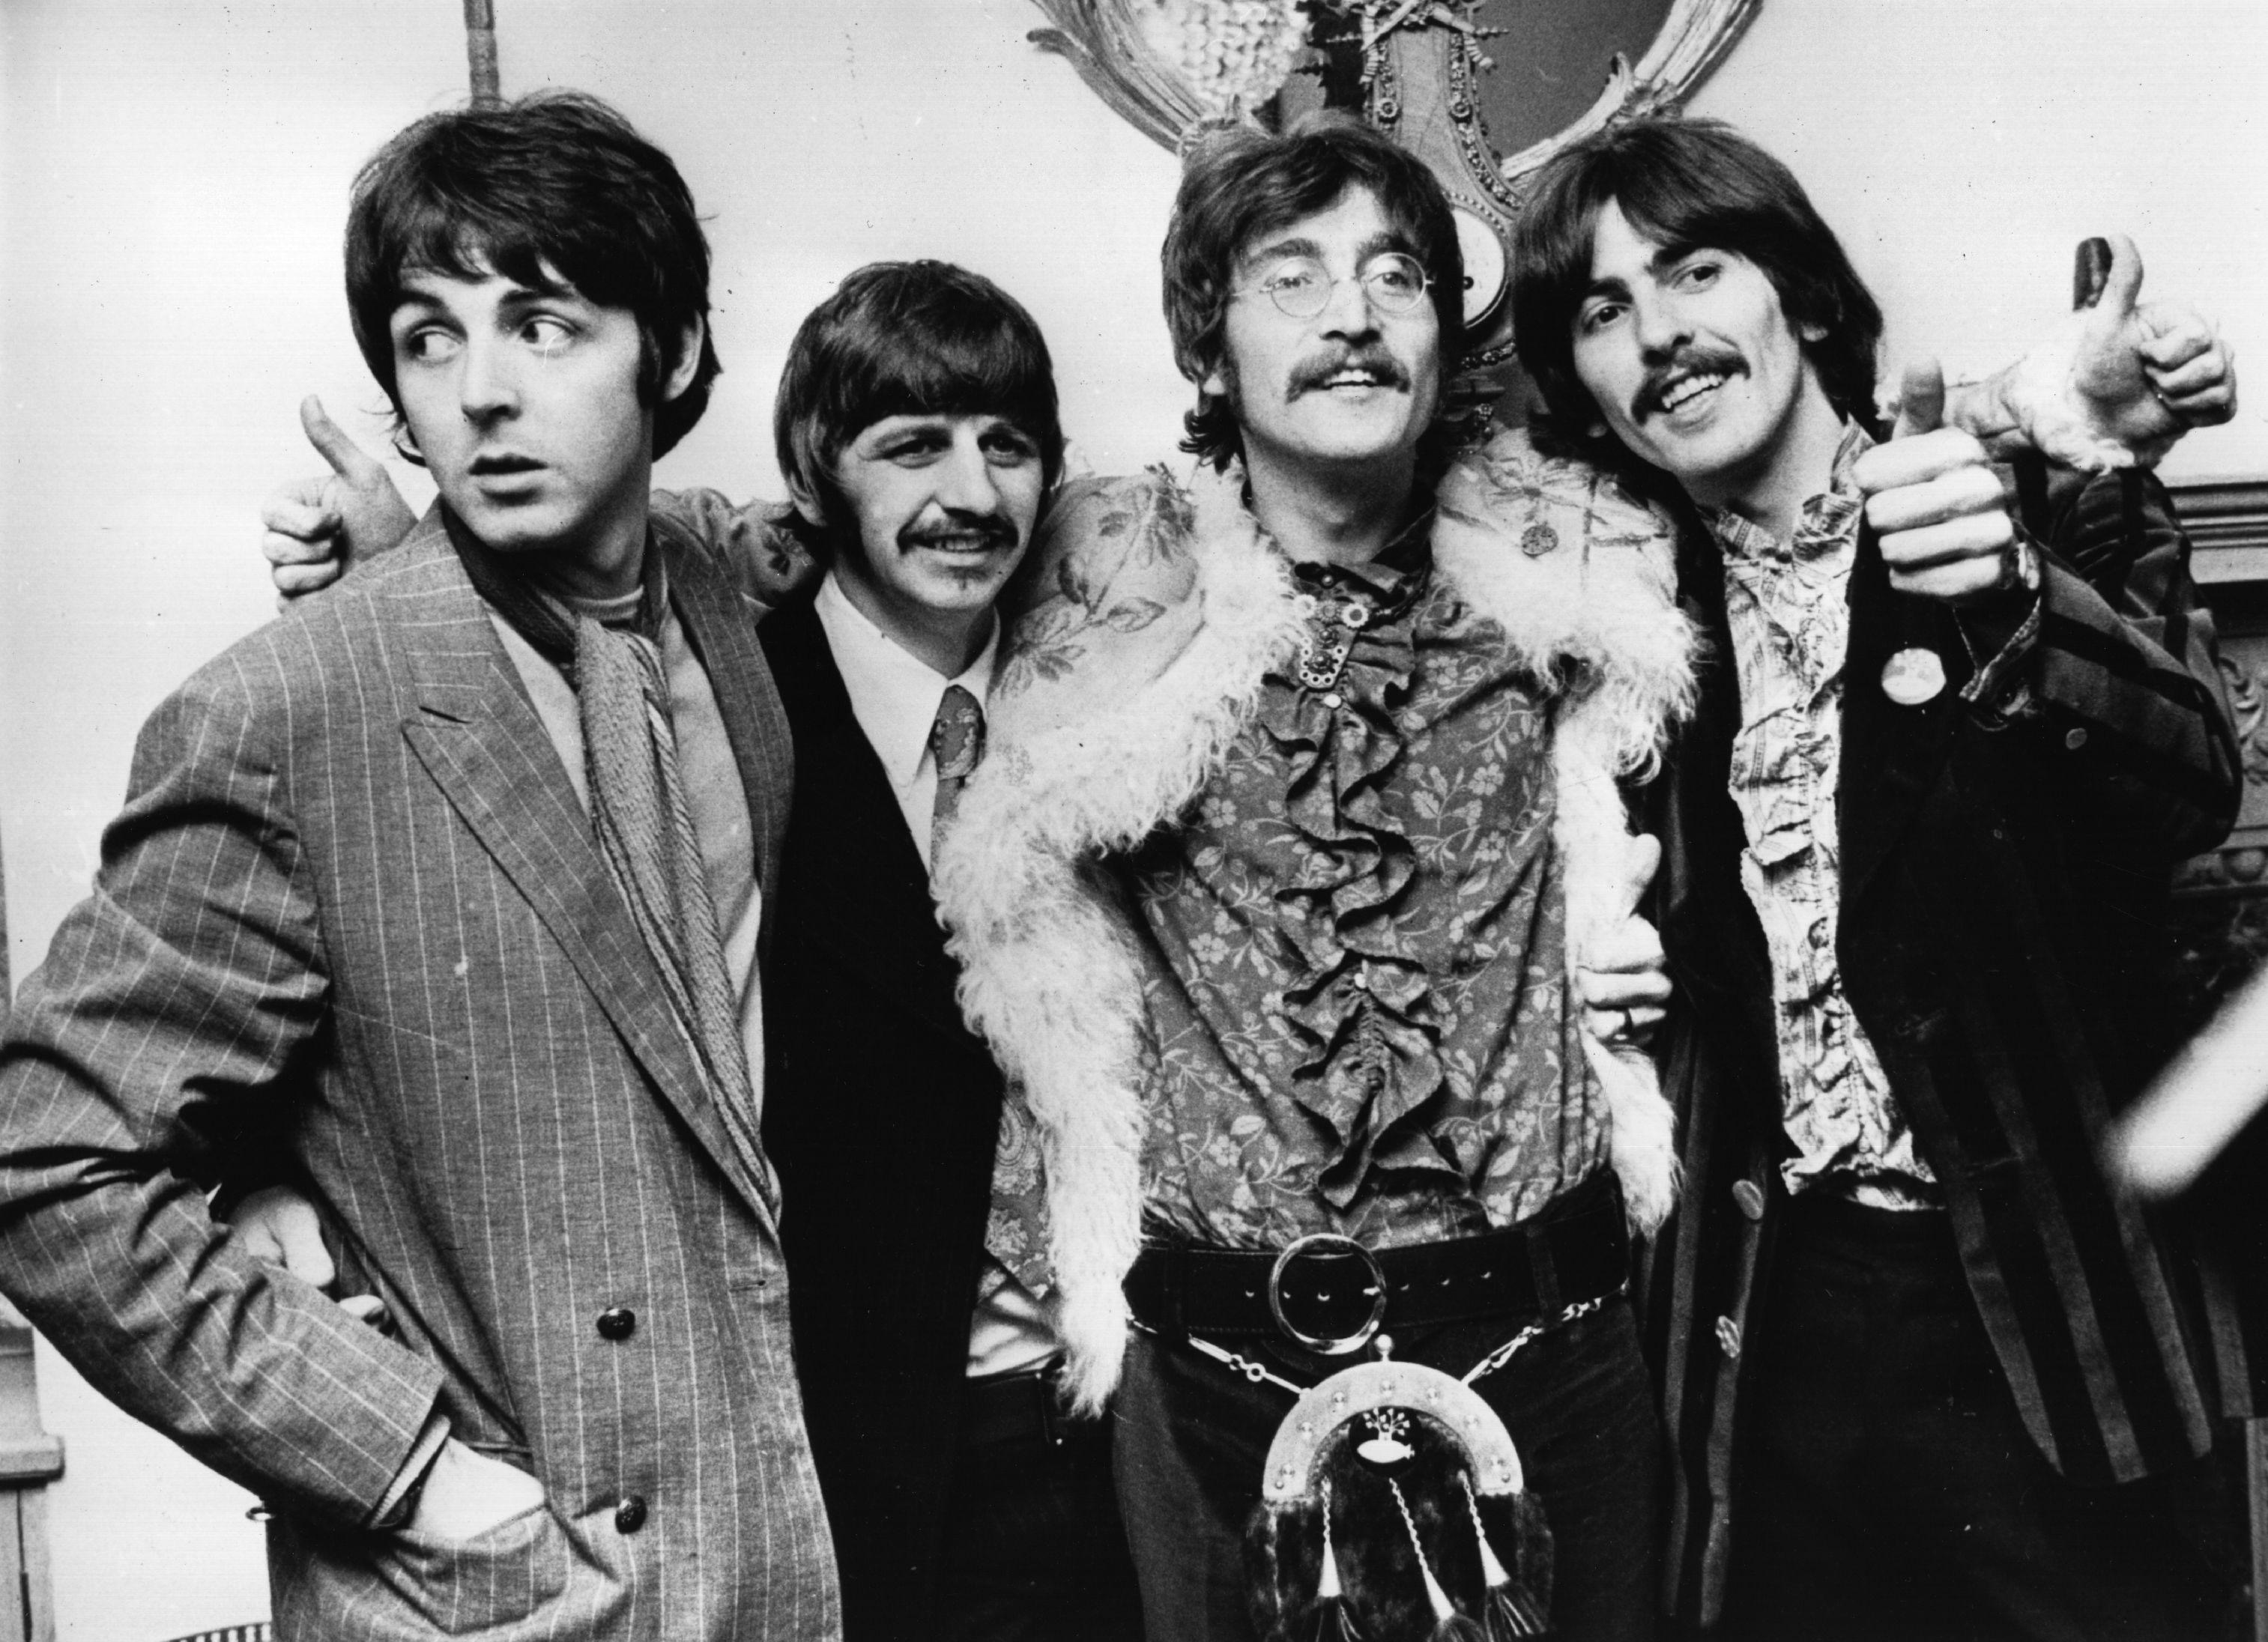 The Beatles' Paul McCartney, Ringo Starr, John Lennon, and George Harrison